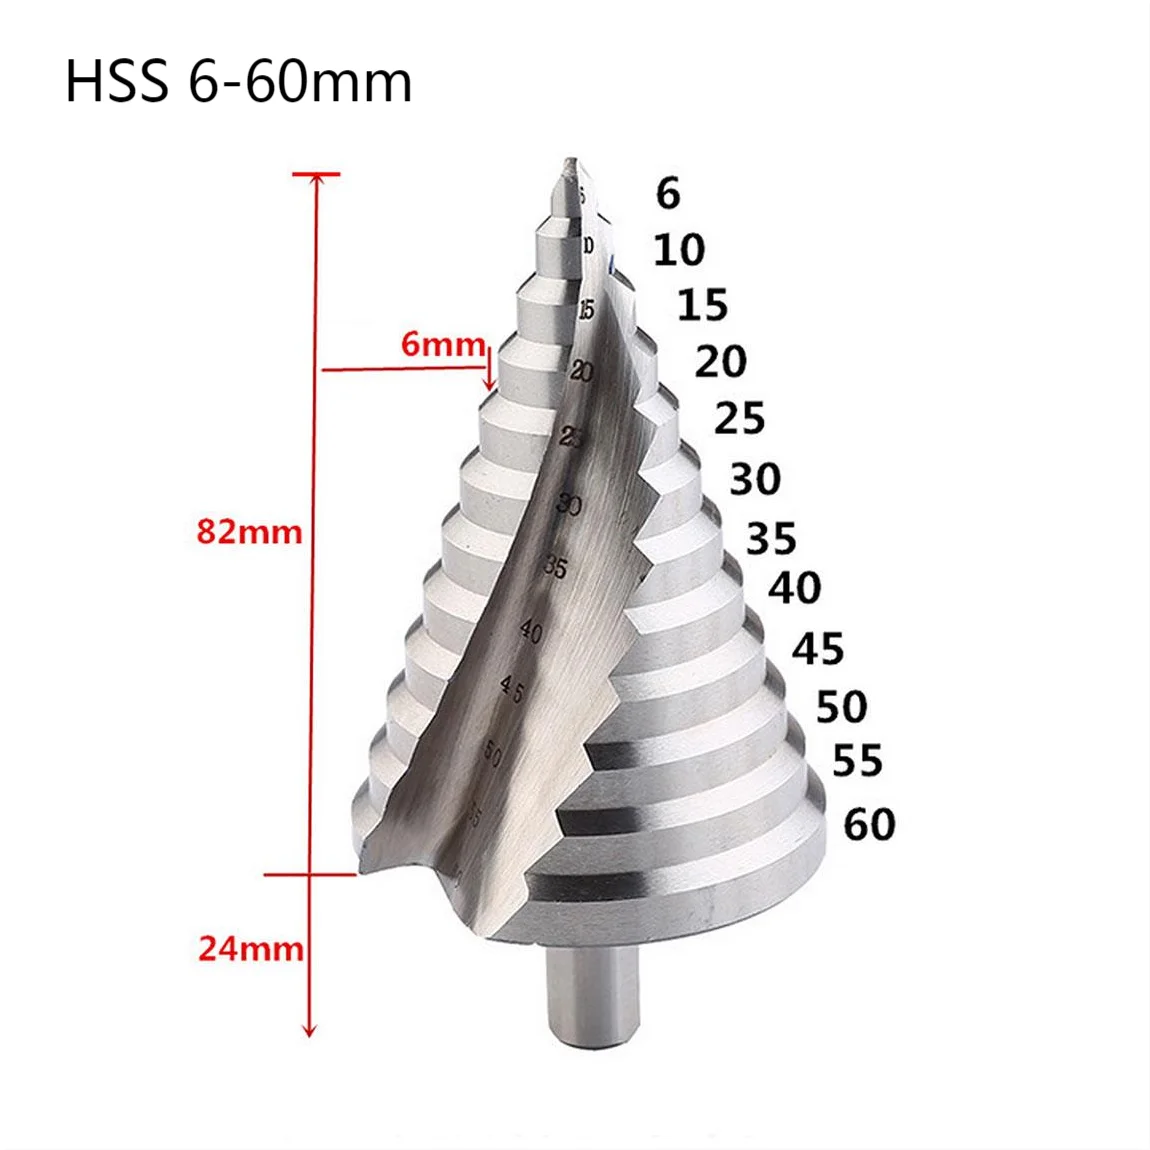 Titanium HSS 6mm-60mm Spiral Groove Step Cone Drill Bit Hole Cutter Round Shank